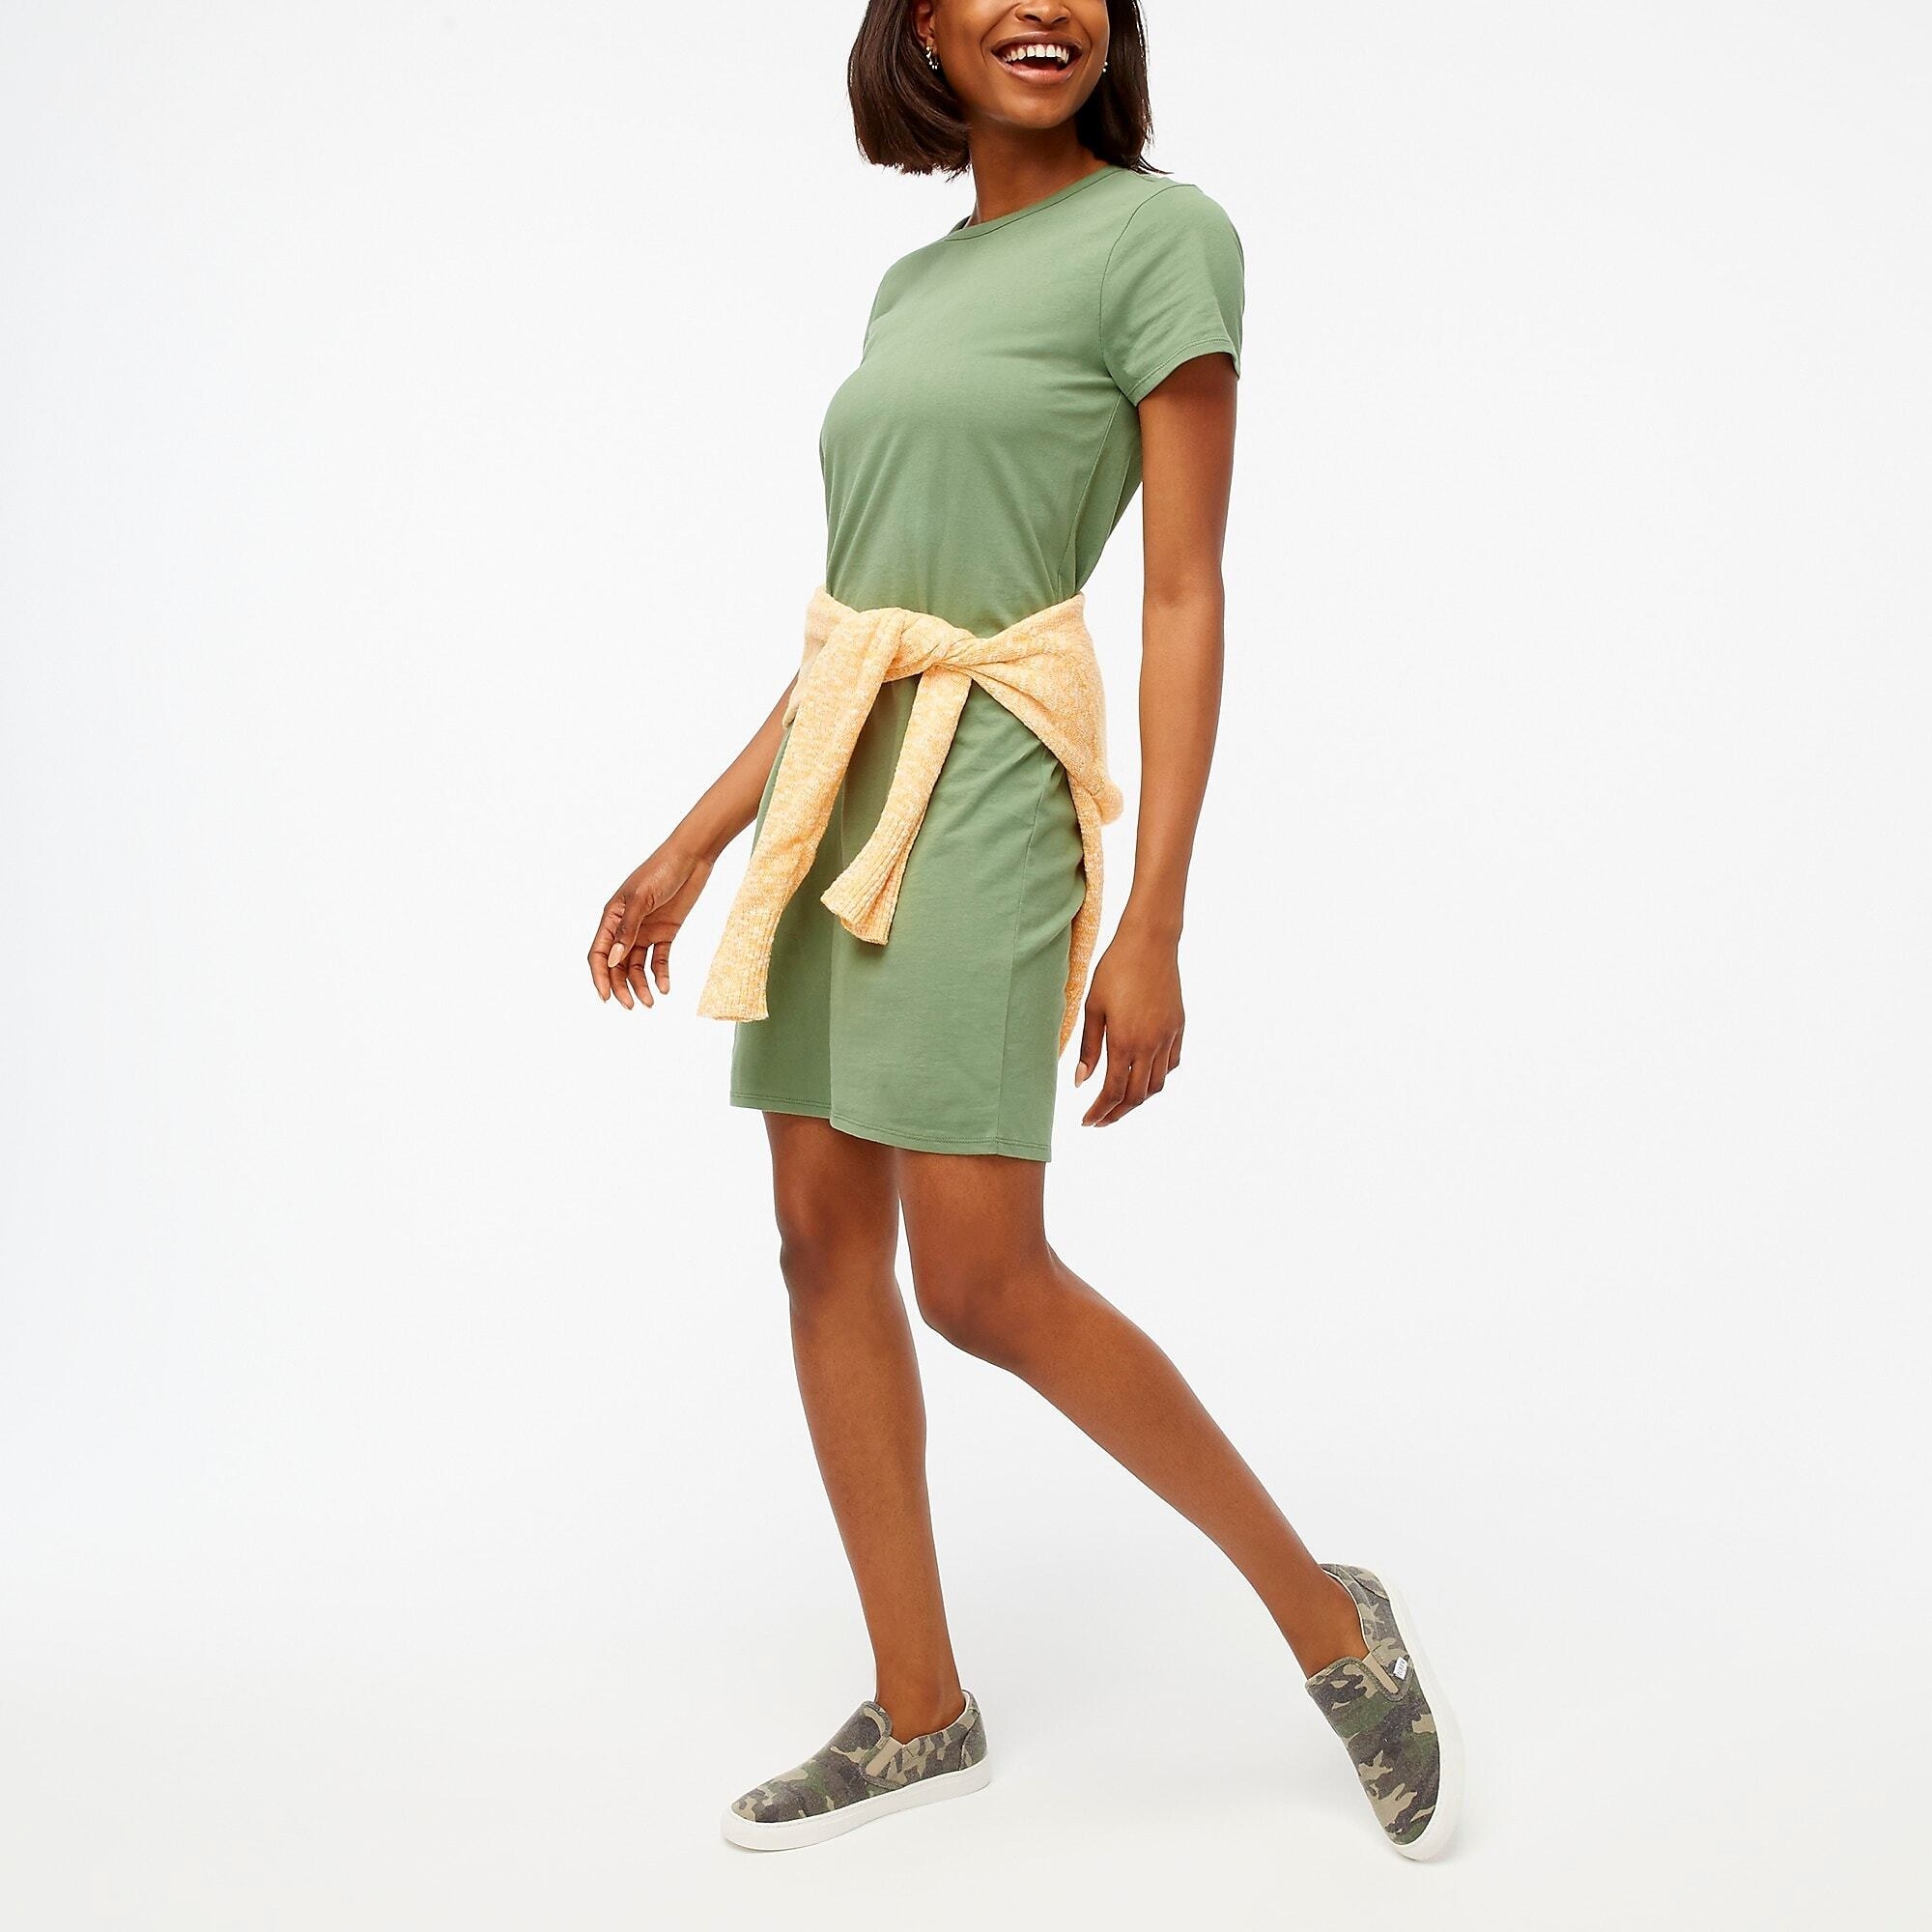 Model wearing the faded moss short-sleeve t-shirt dress